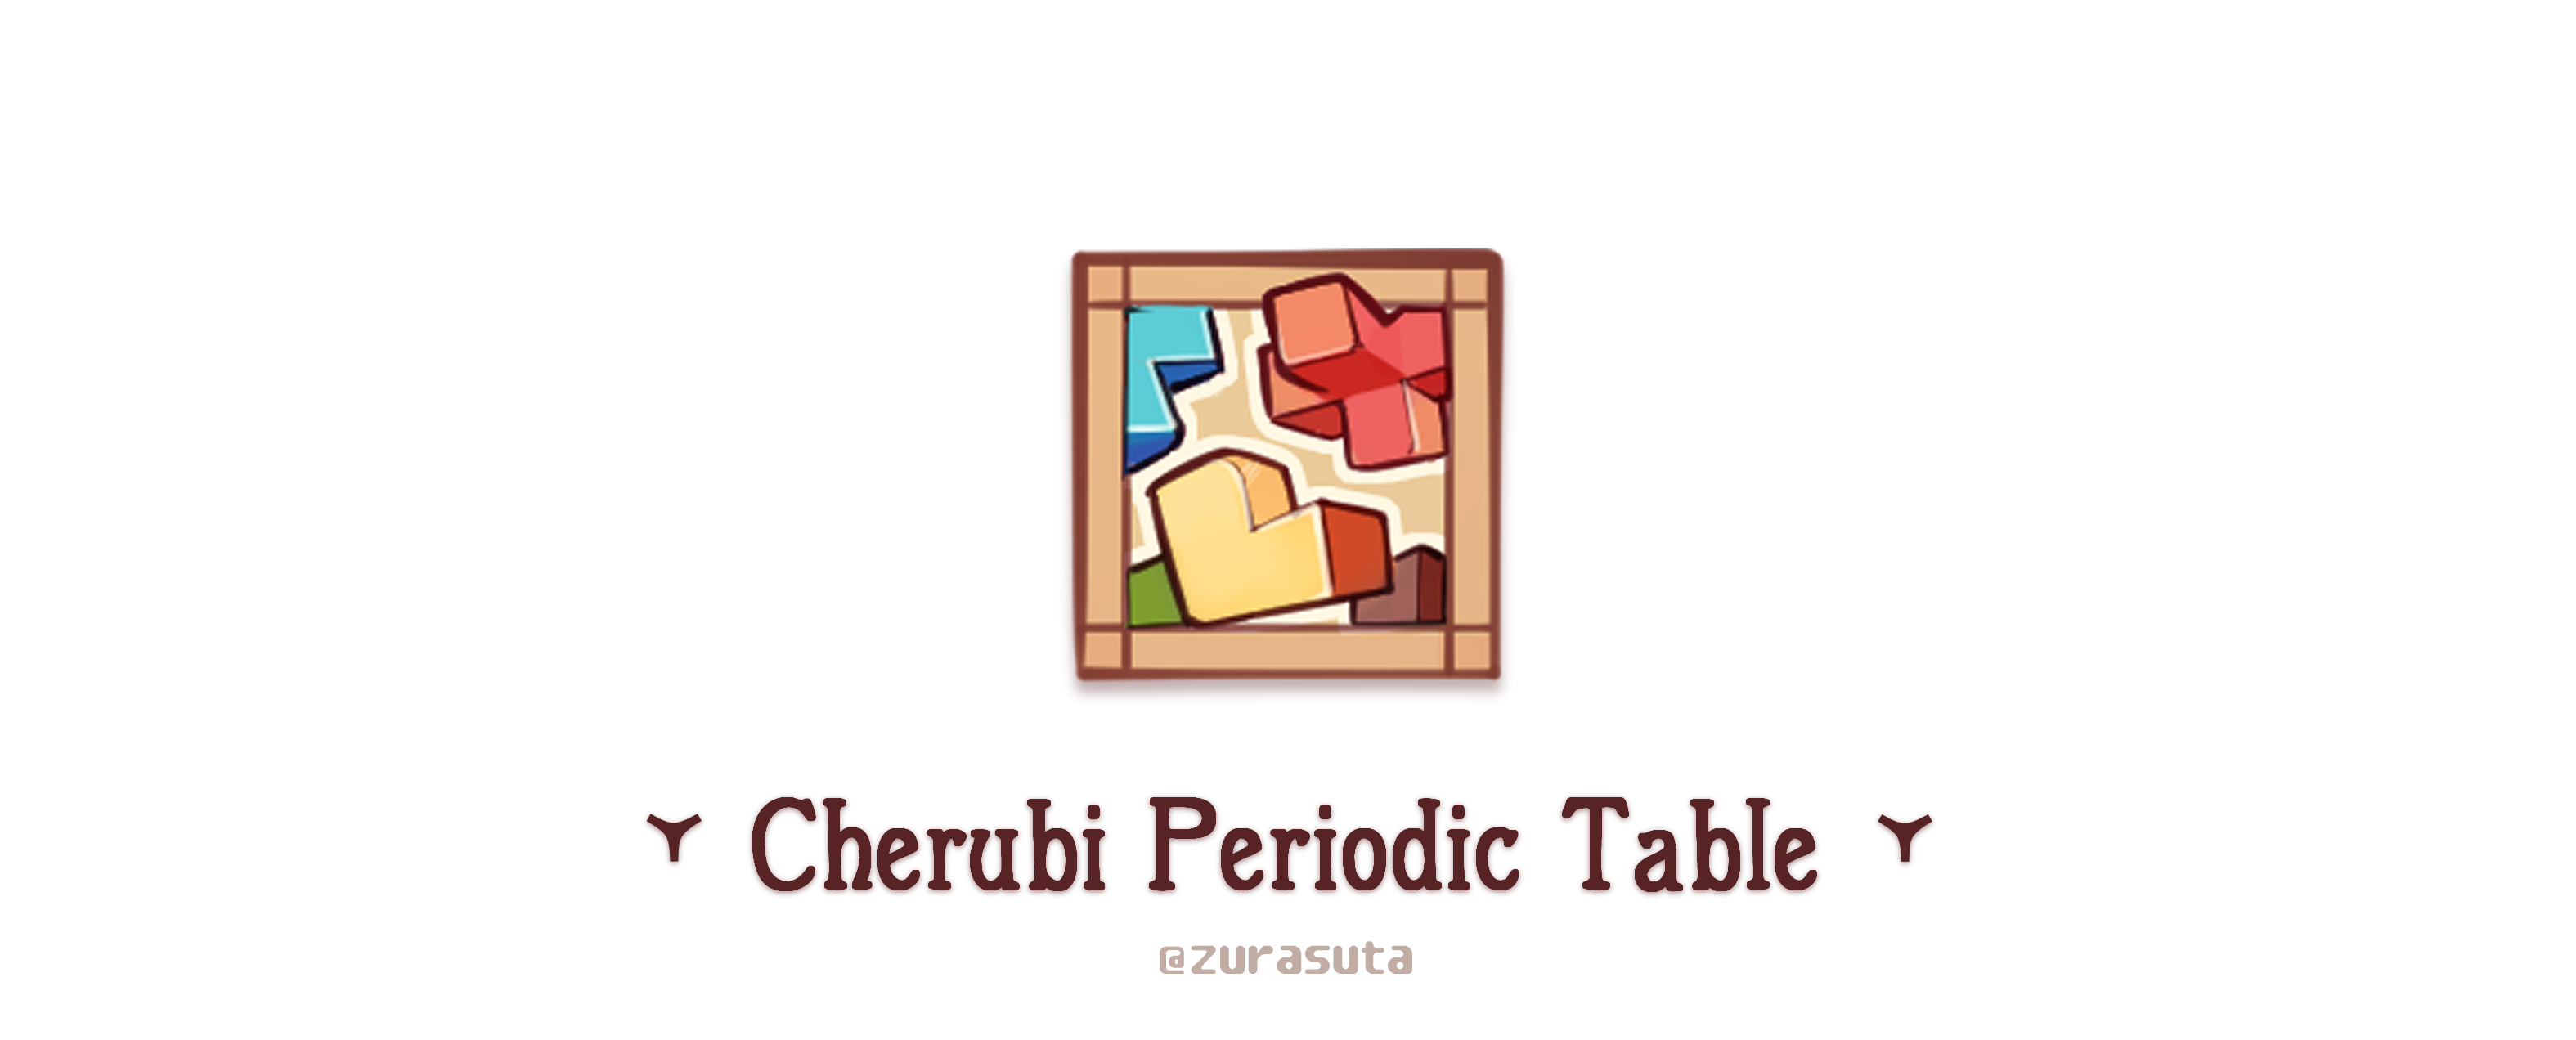 Cherubi Periodic Table